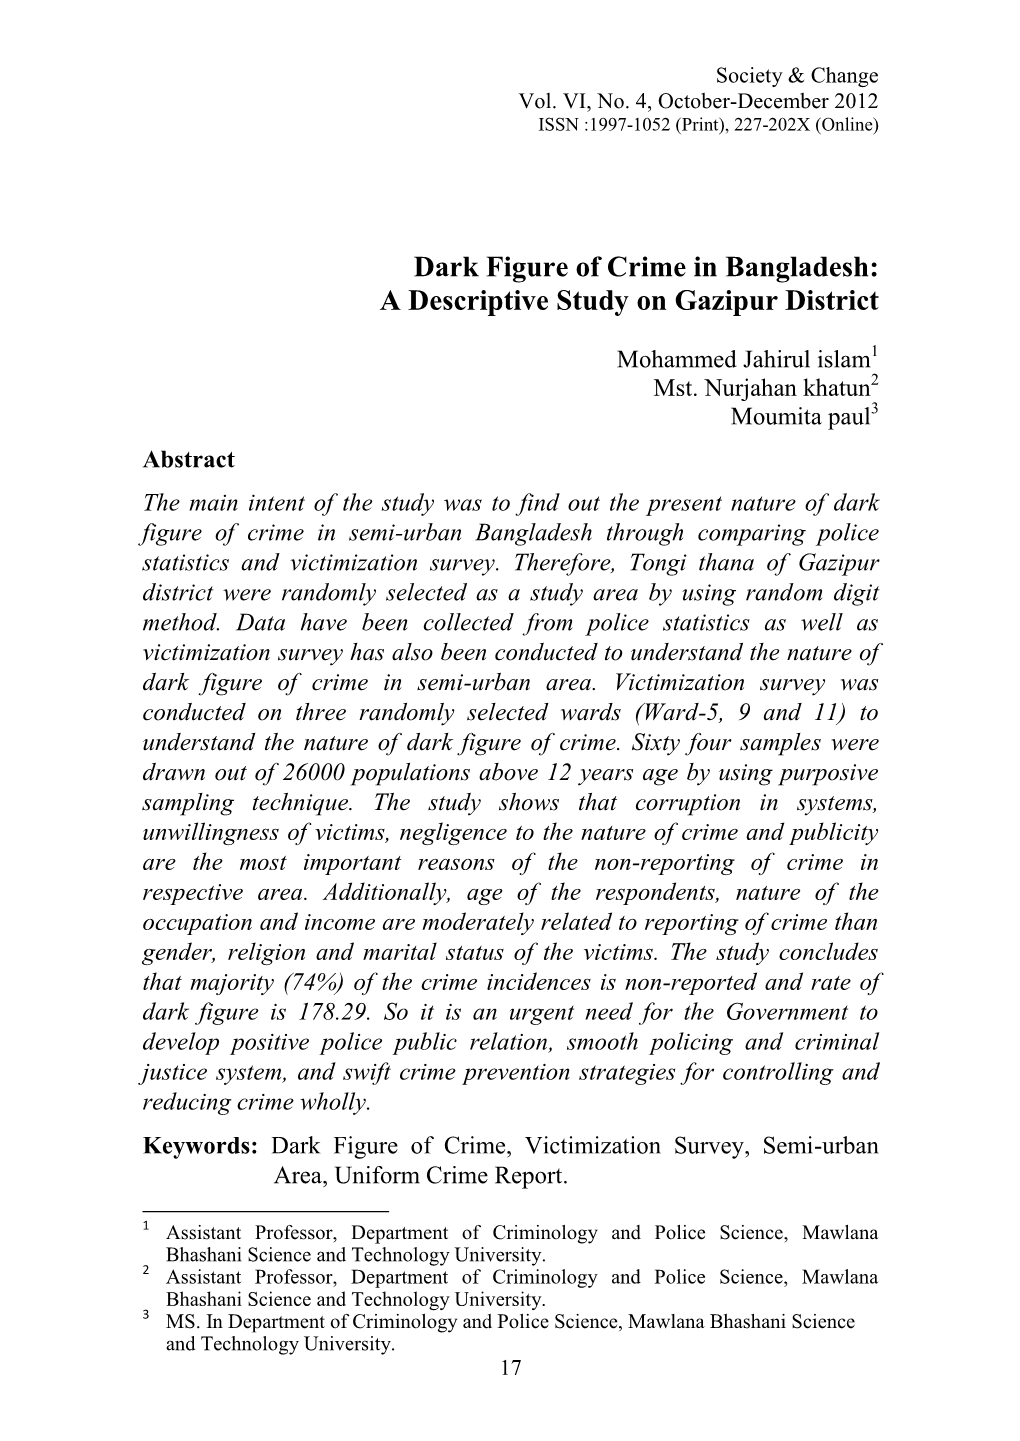 Dark Figure of Crime in Bangladesh: a Descriptive Study on Gazipur District